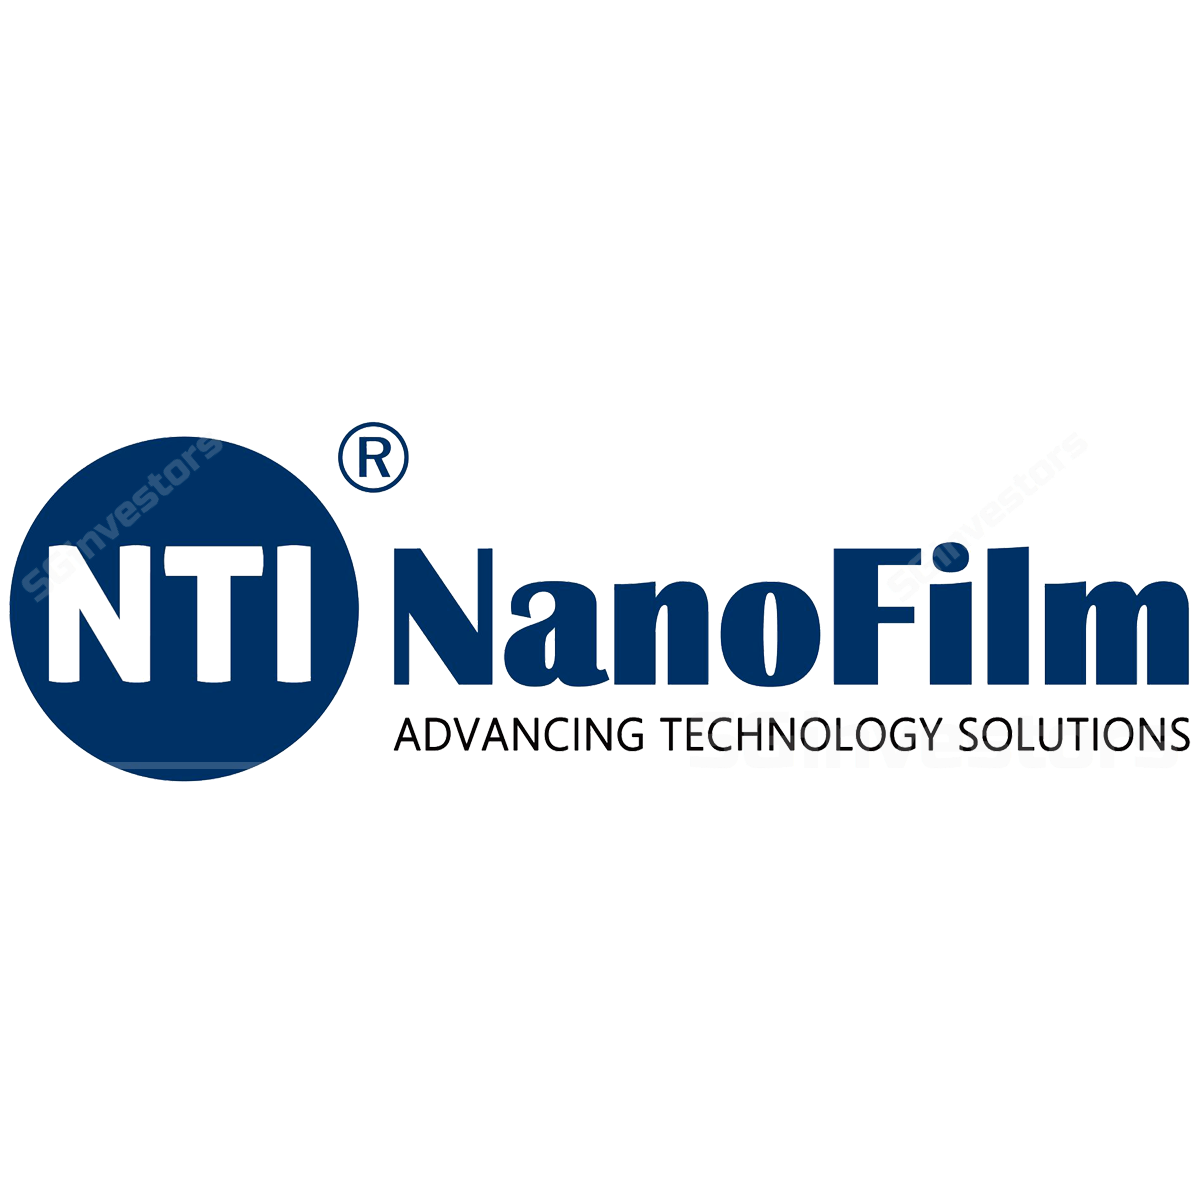 DBS: Nanofilm Technologies International Ltd. – BUY TP $4.12 (Previous $4.96)